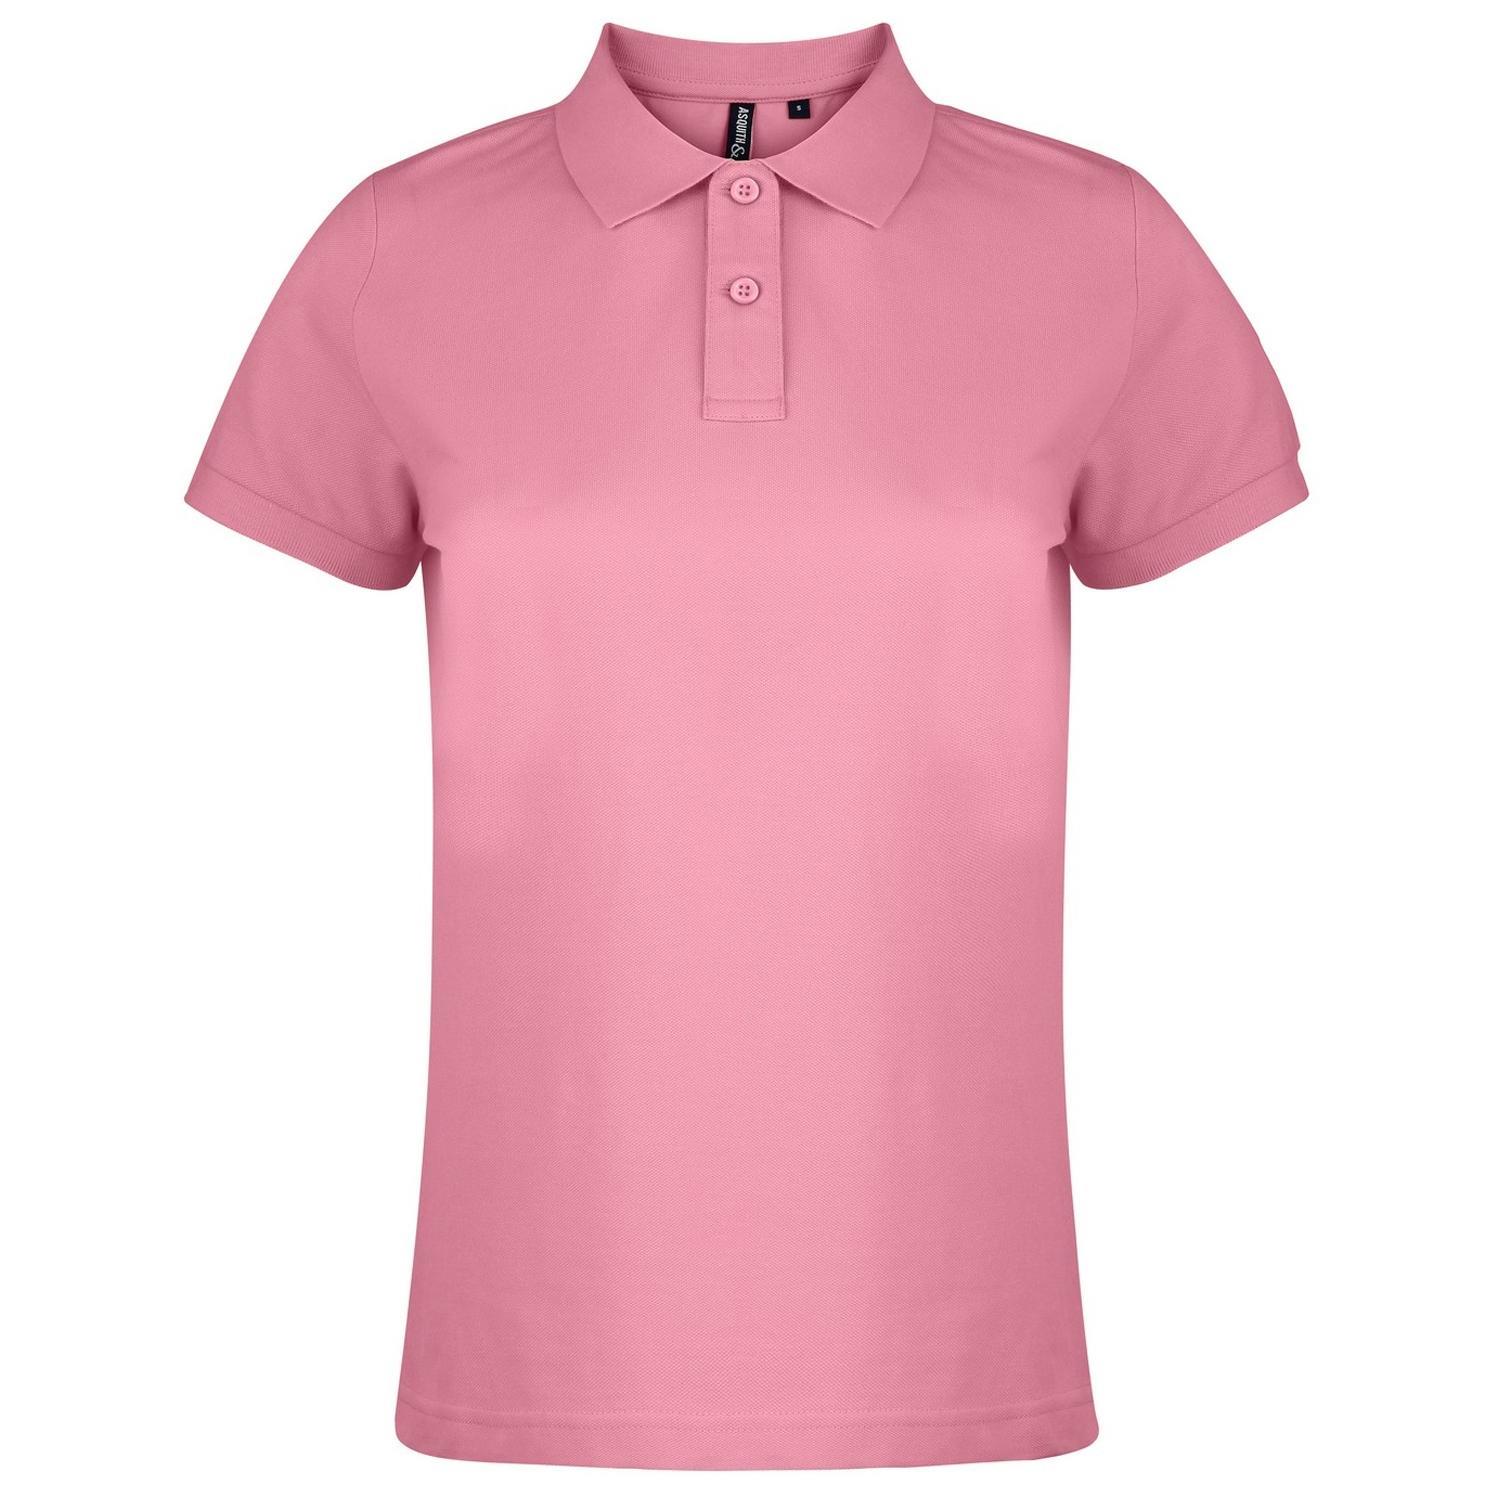 Asquith & Fox Womens/Ladies Plain Short Sleeve Polo Shirt (Pink Carnation) (2XL)